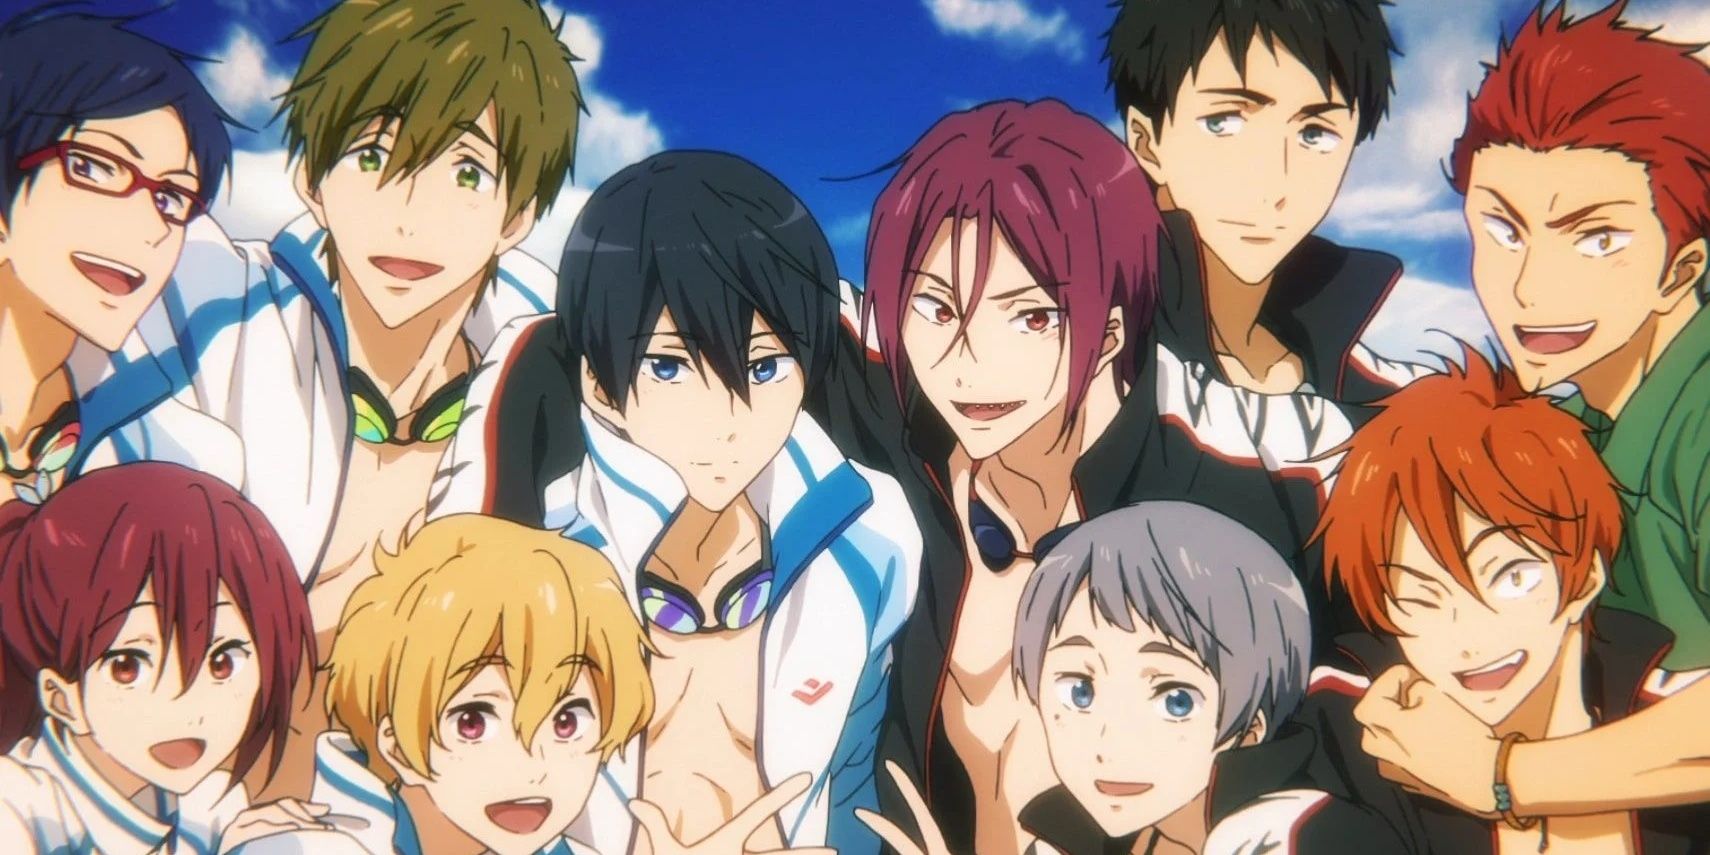 Free! - Iwatobi Swim Club: Has the Anime Overstayed Its Welcome?